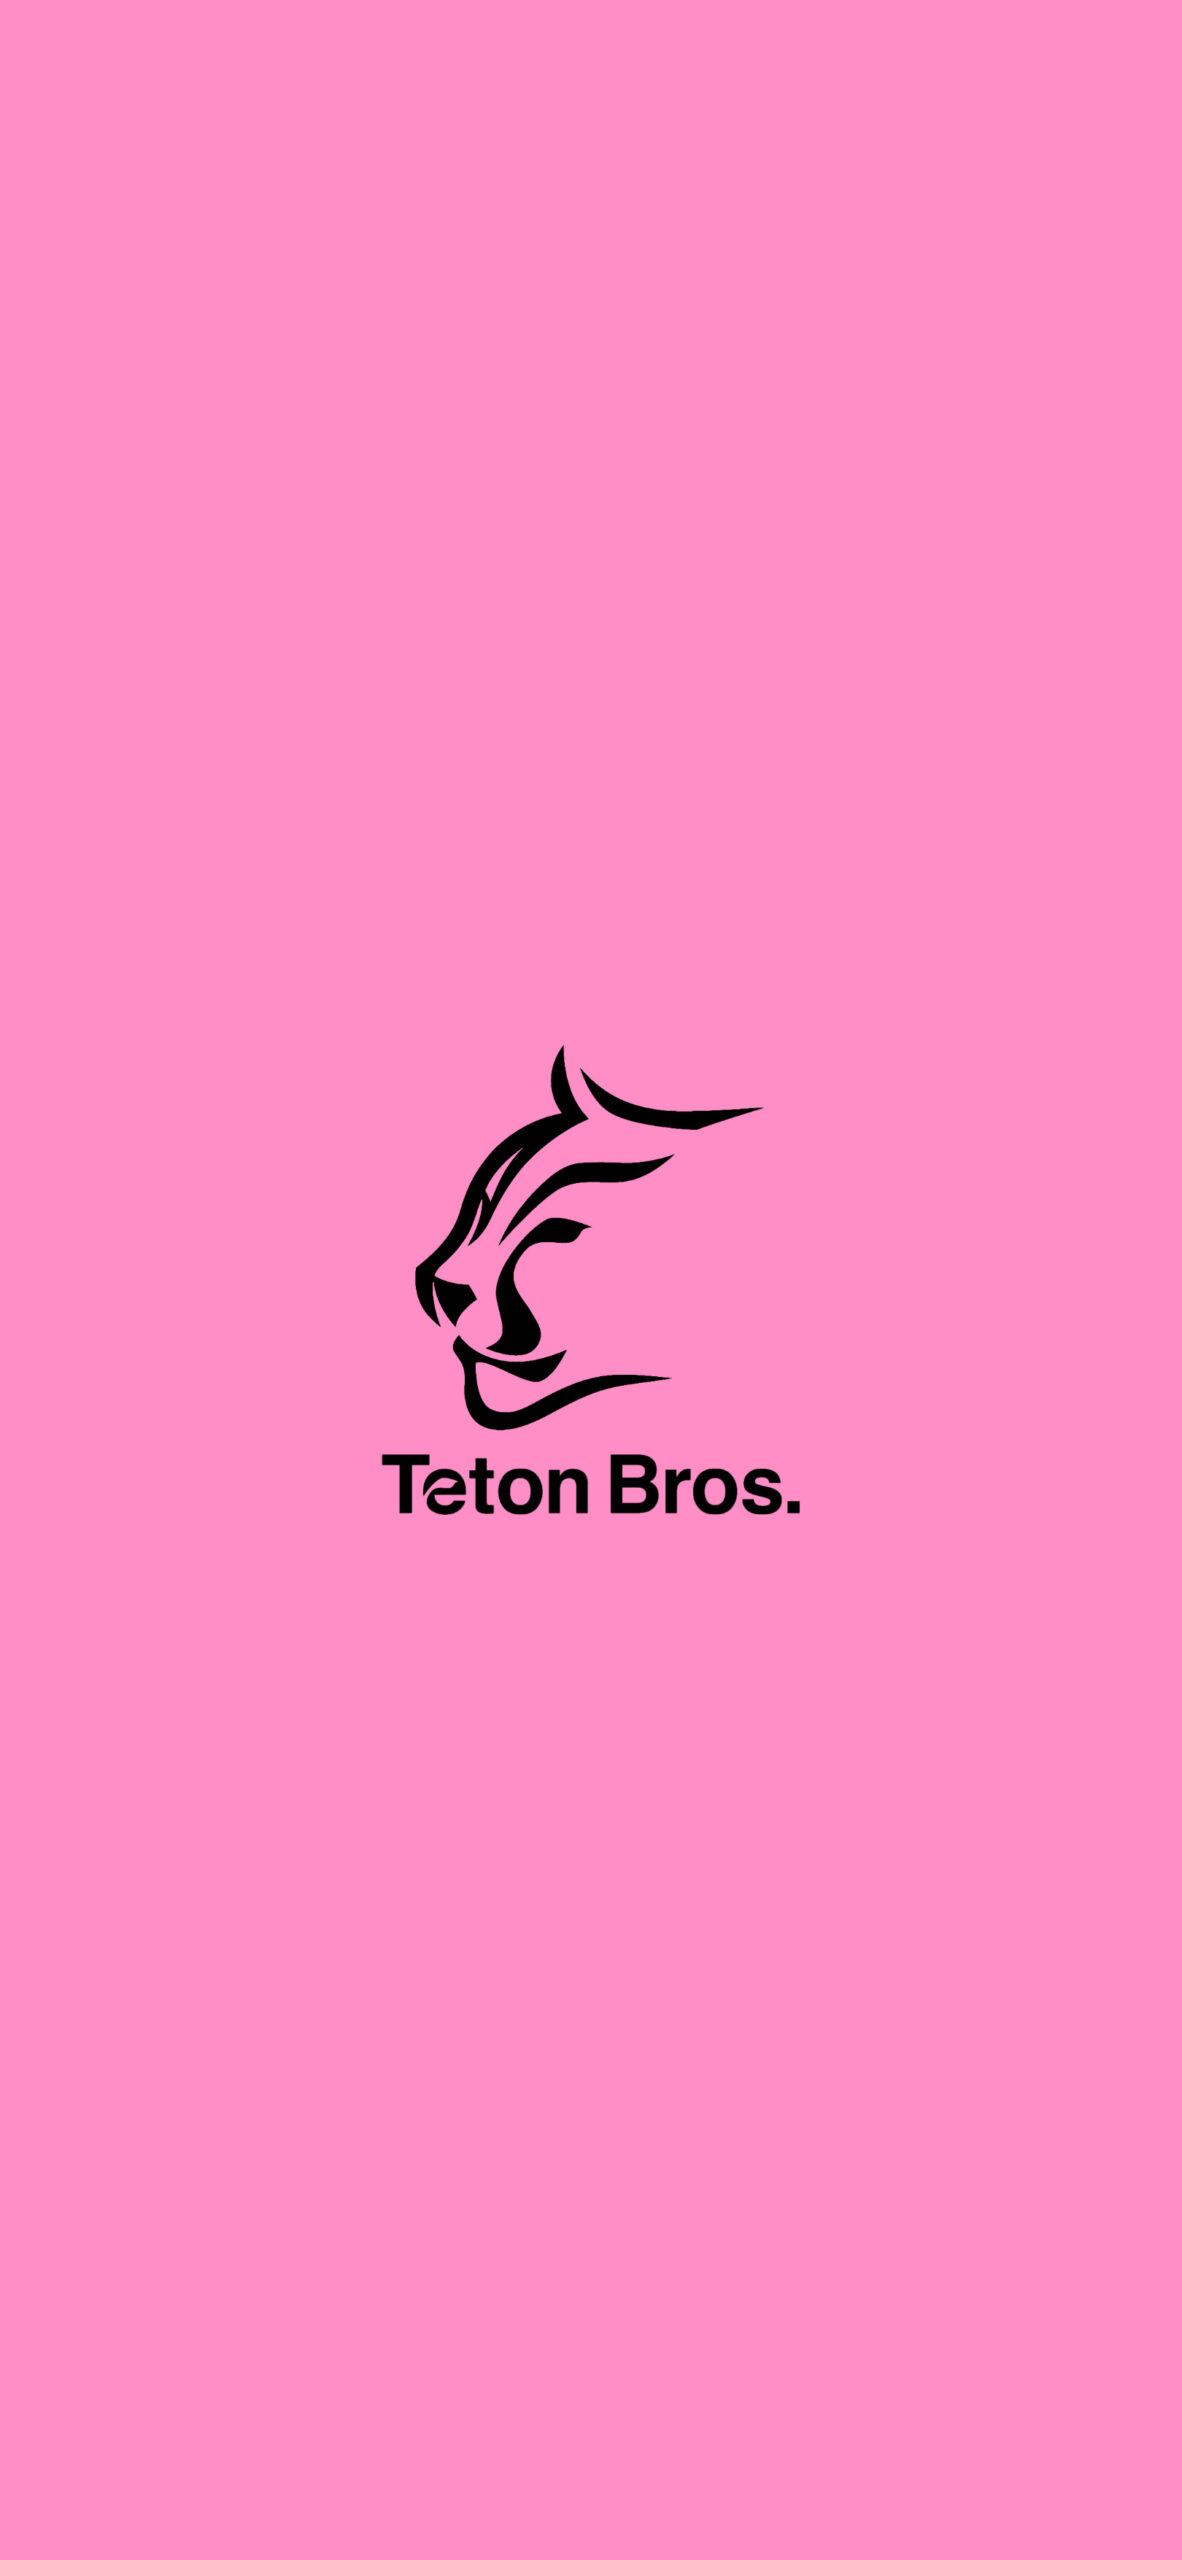 Teton Bros ティートンブロスの無料高画質スマホ壁紙50枚 エモい スマホ壁紙辞典